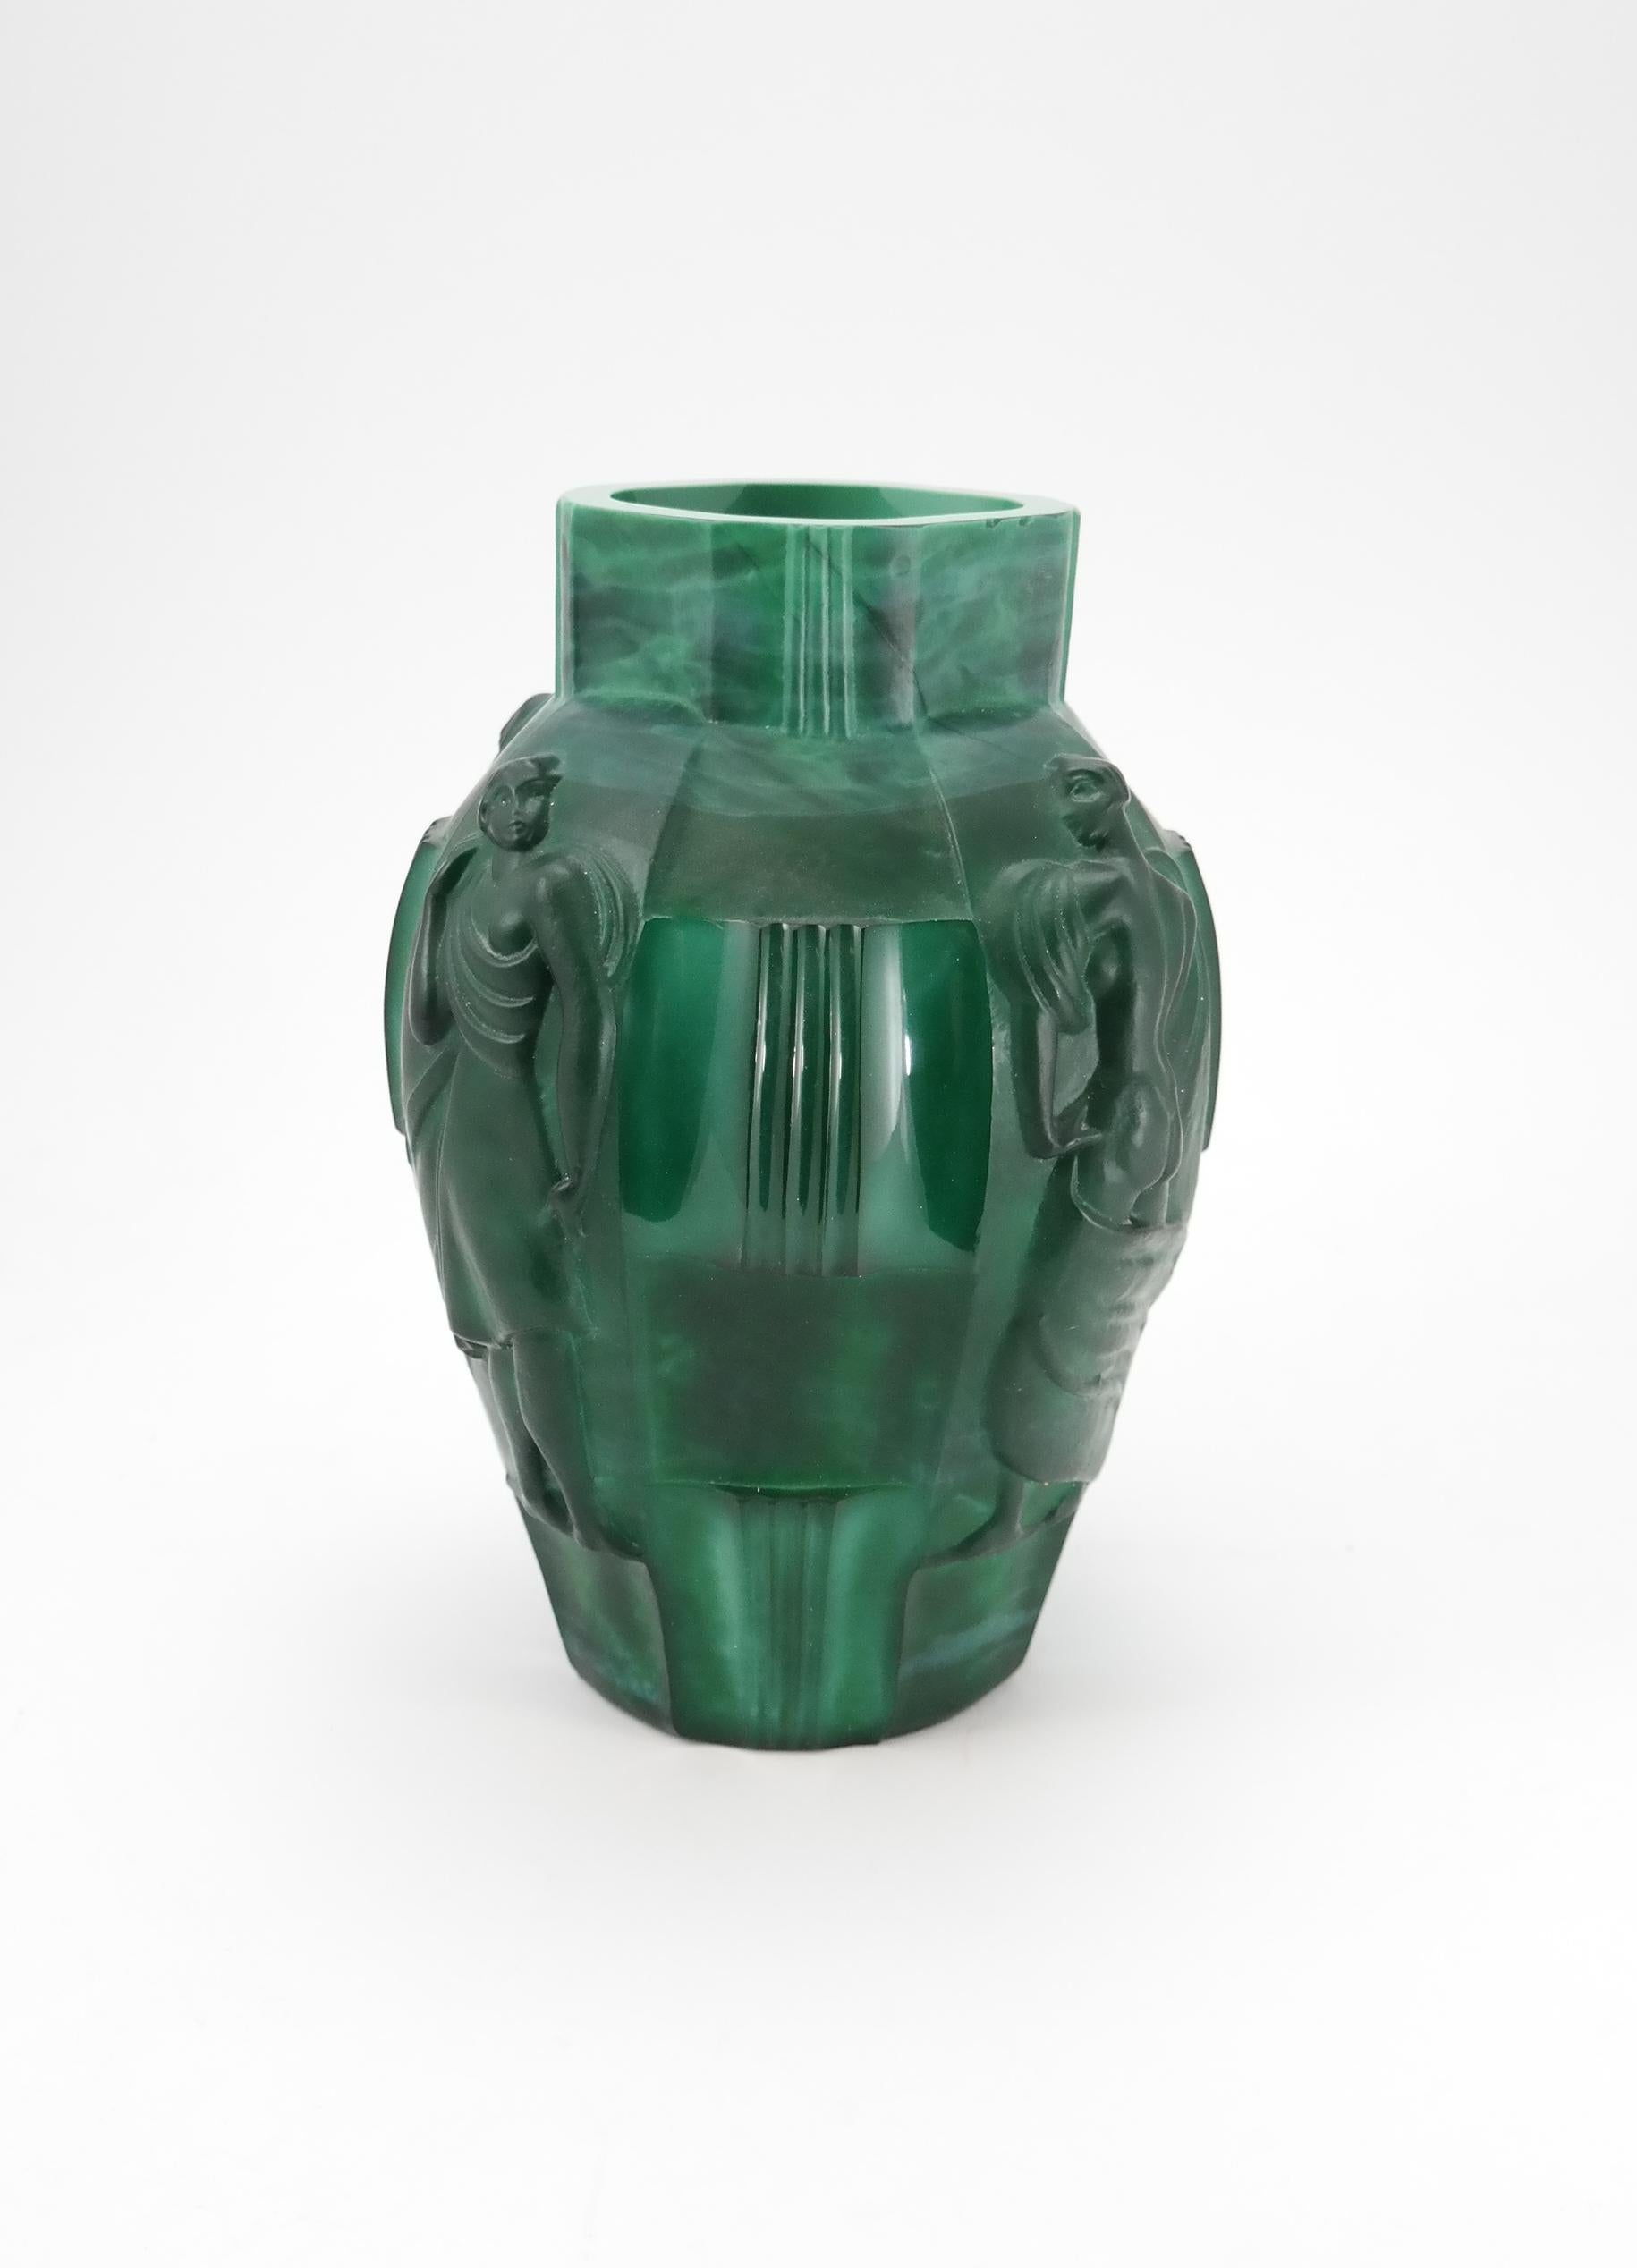 Czech Art Deco Malachite Glass Vase by Artur Pleva for Curt Schlevogt, 1930s